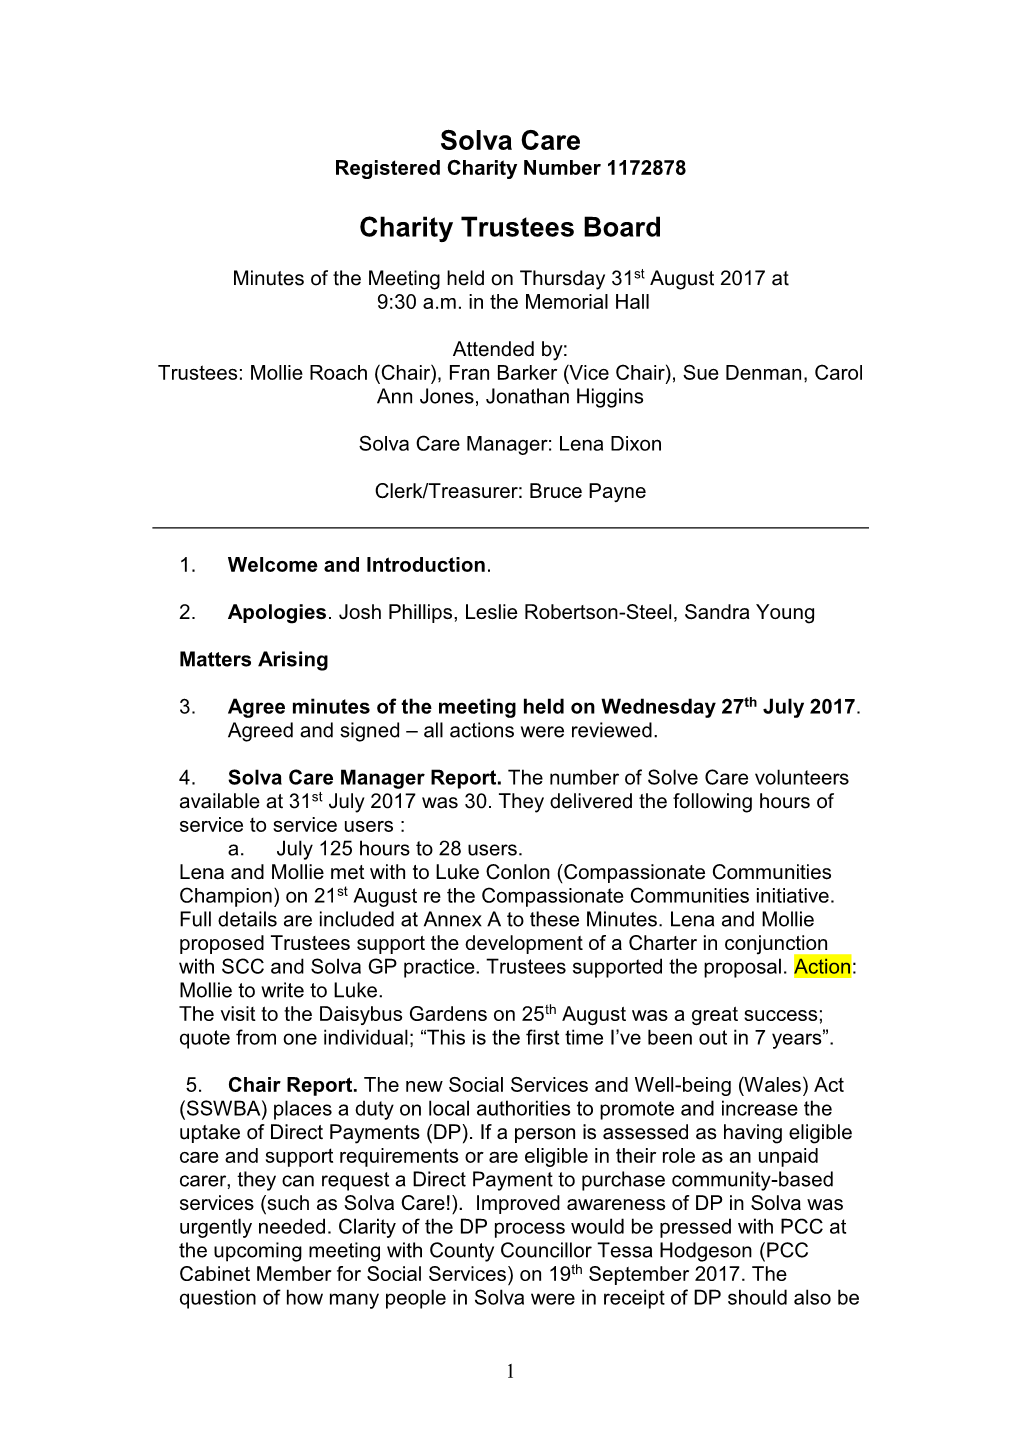 Charity Trustees Board